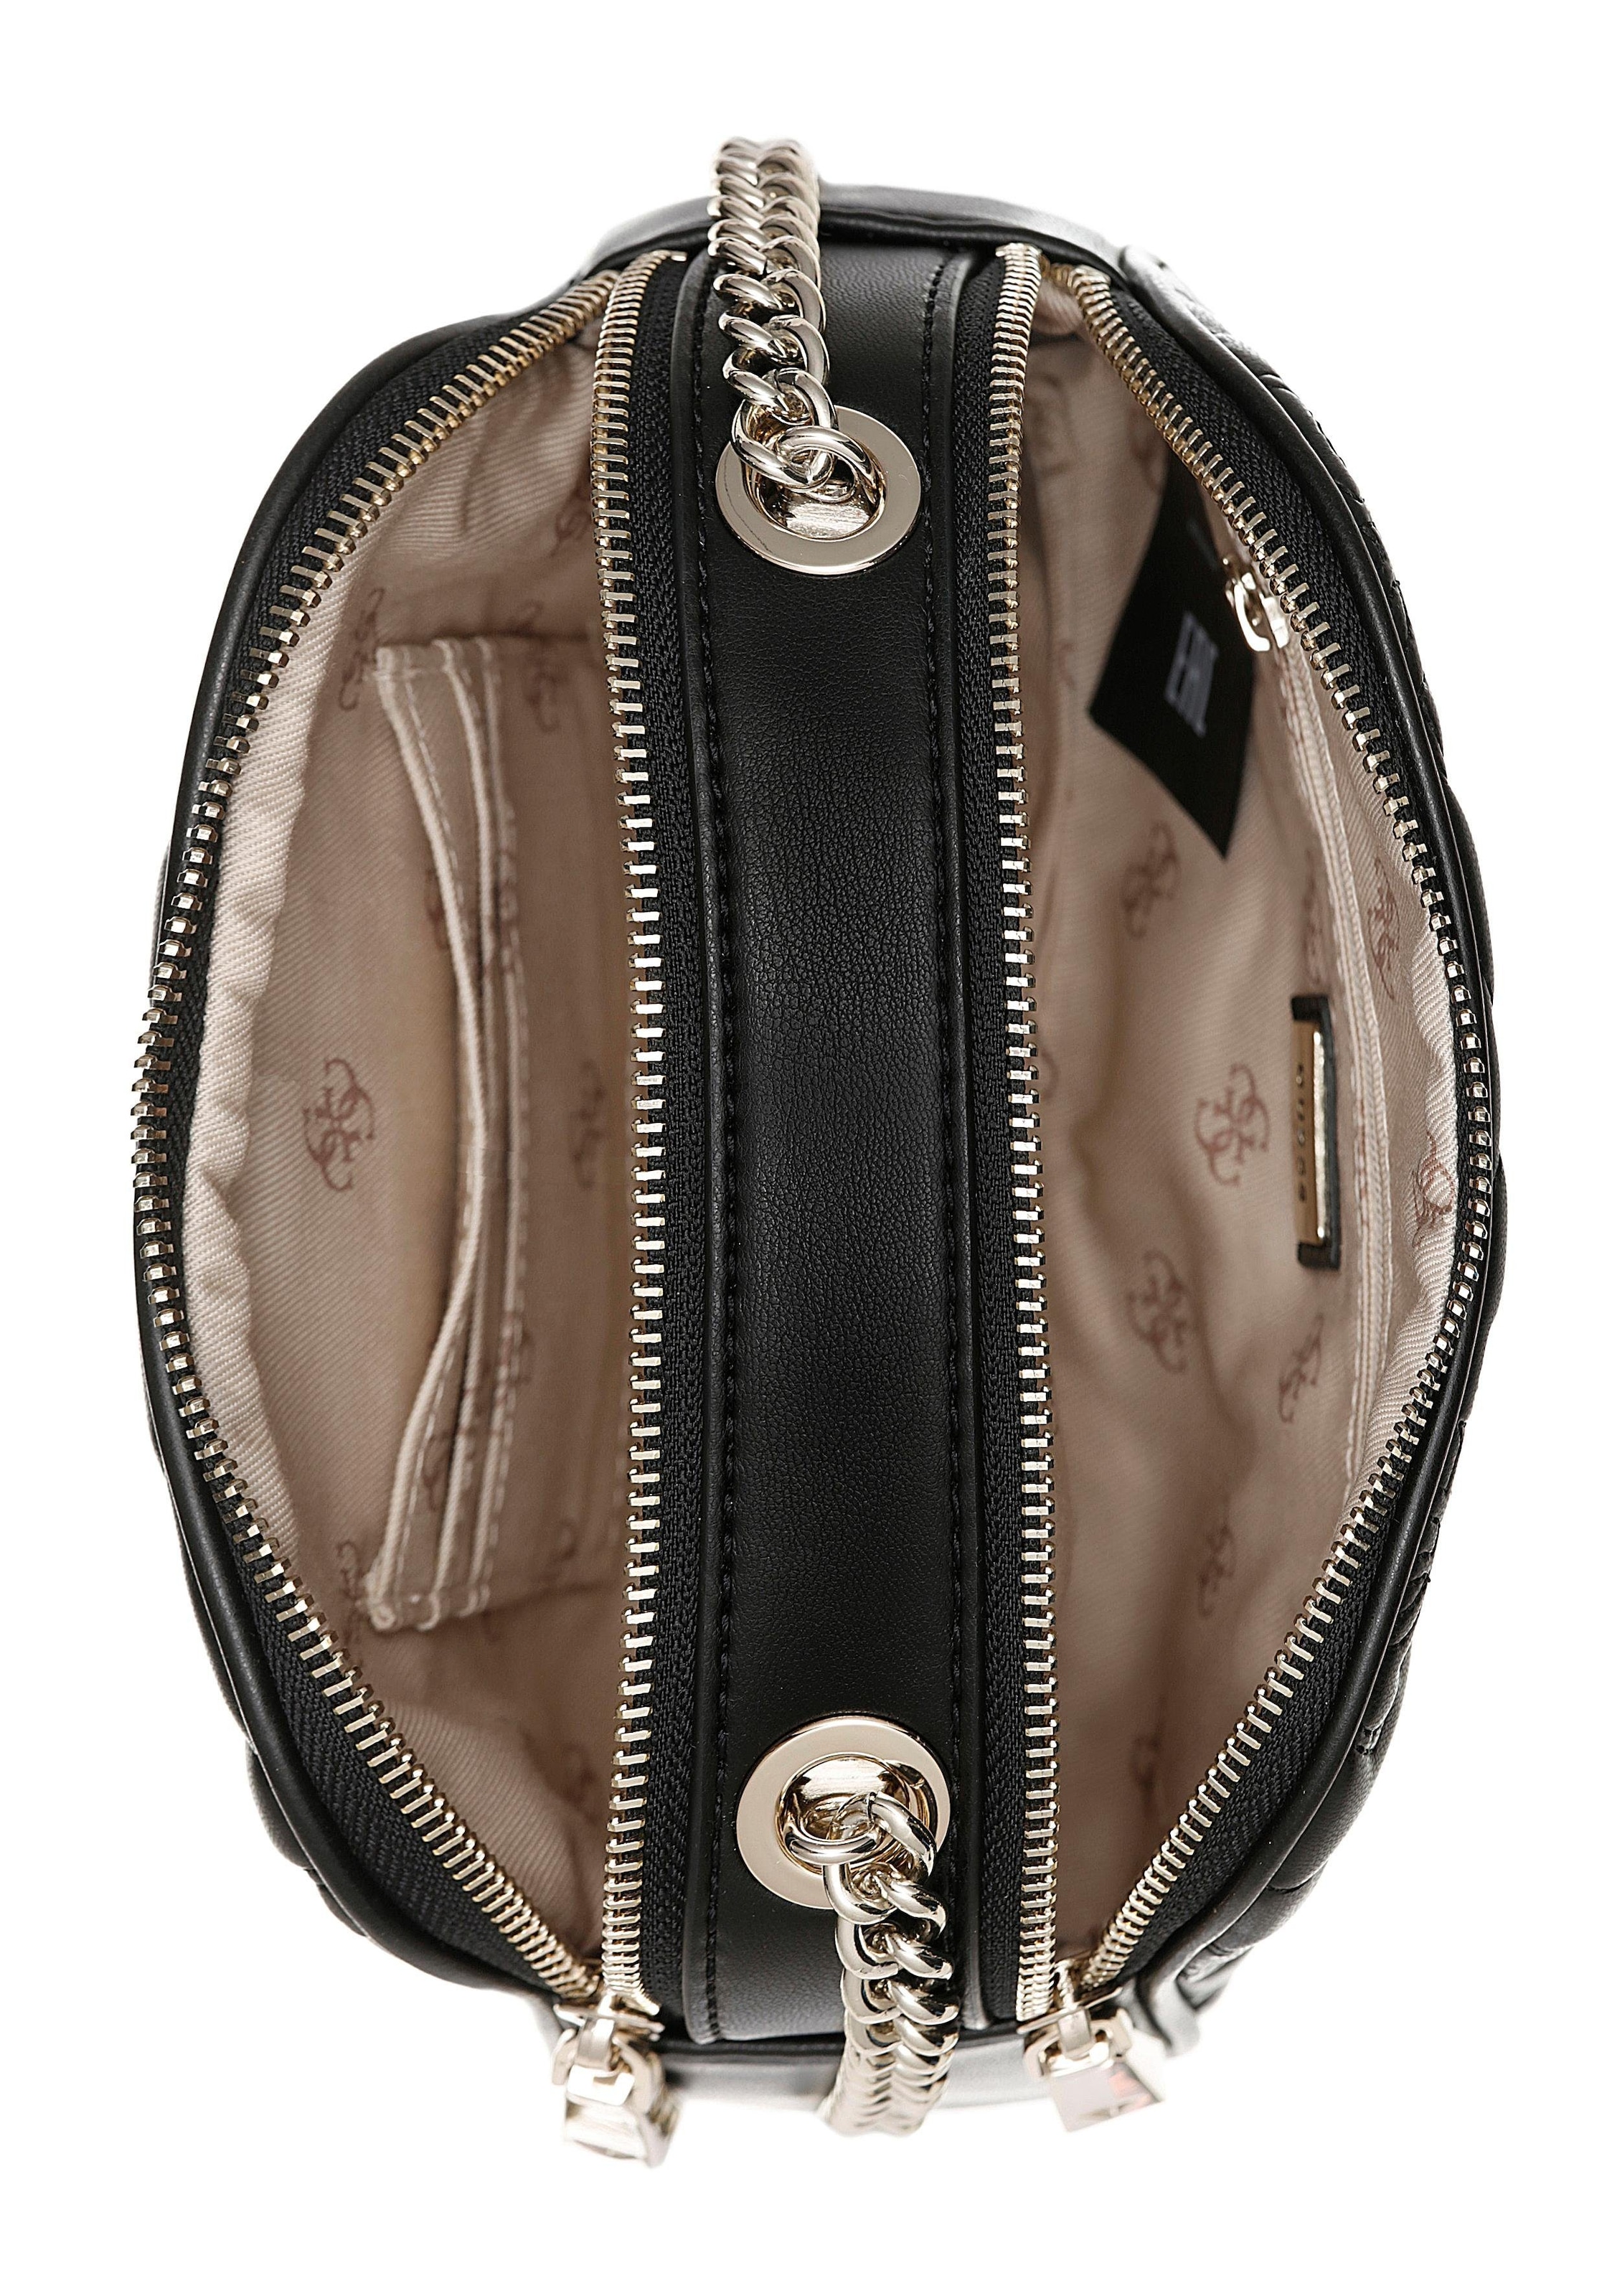 Guess Mini Bag »Shanina Mini XBody Double Zip«, mit trendiger Steppung und Nieten